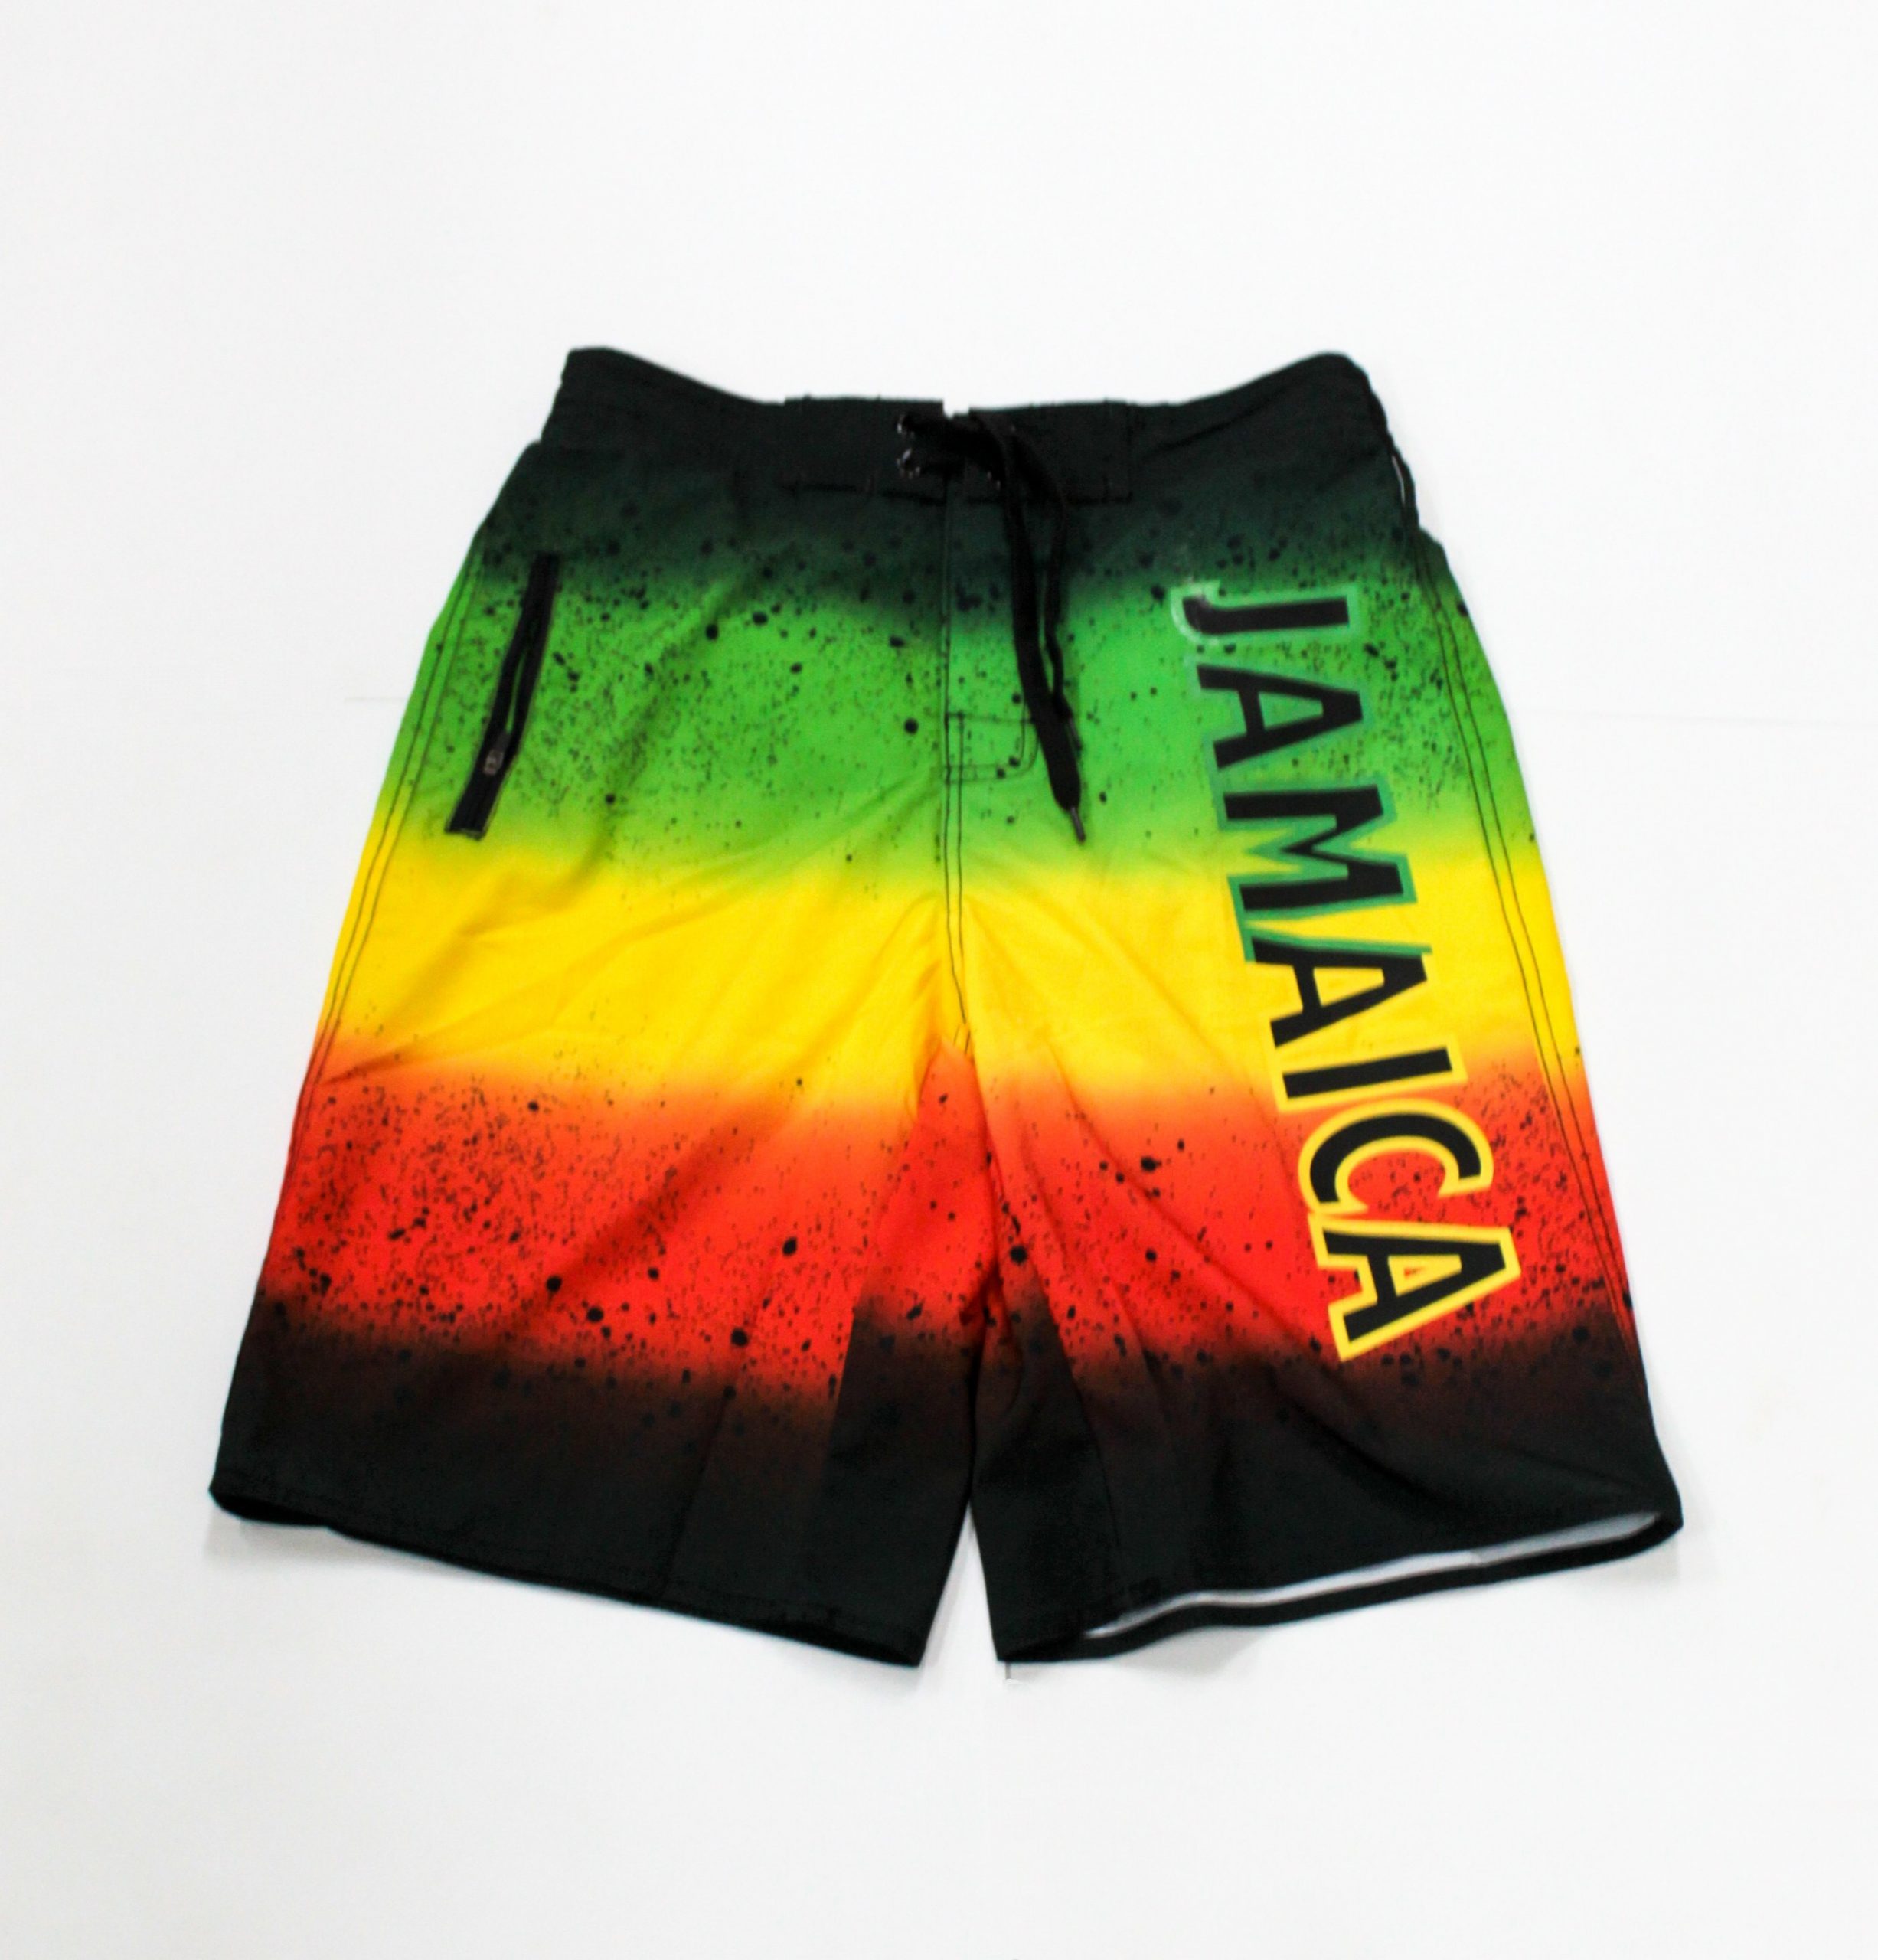 HHNYL Jamaican Flag Swim Trunks Board Shorts Beachwear Bathing Suits for Men